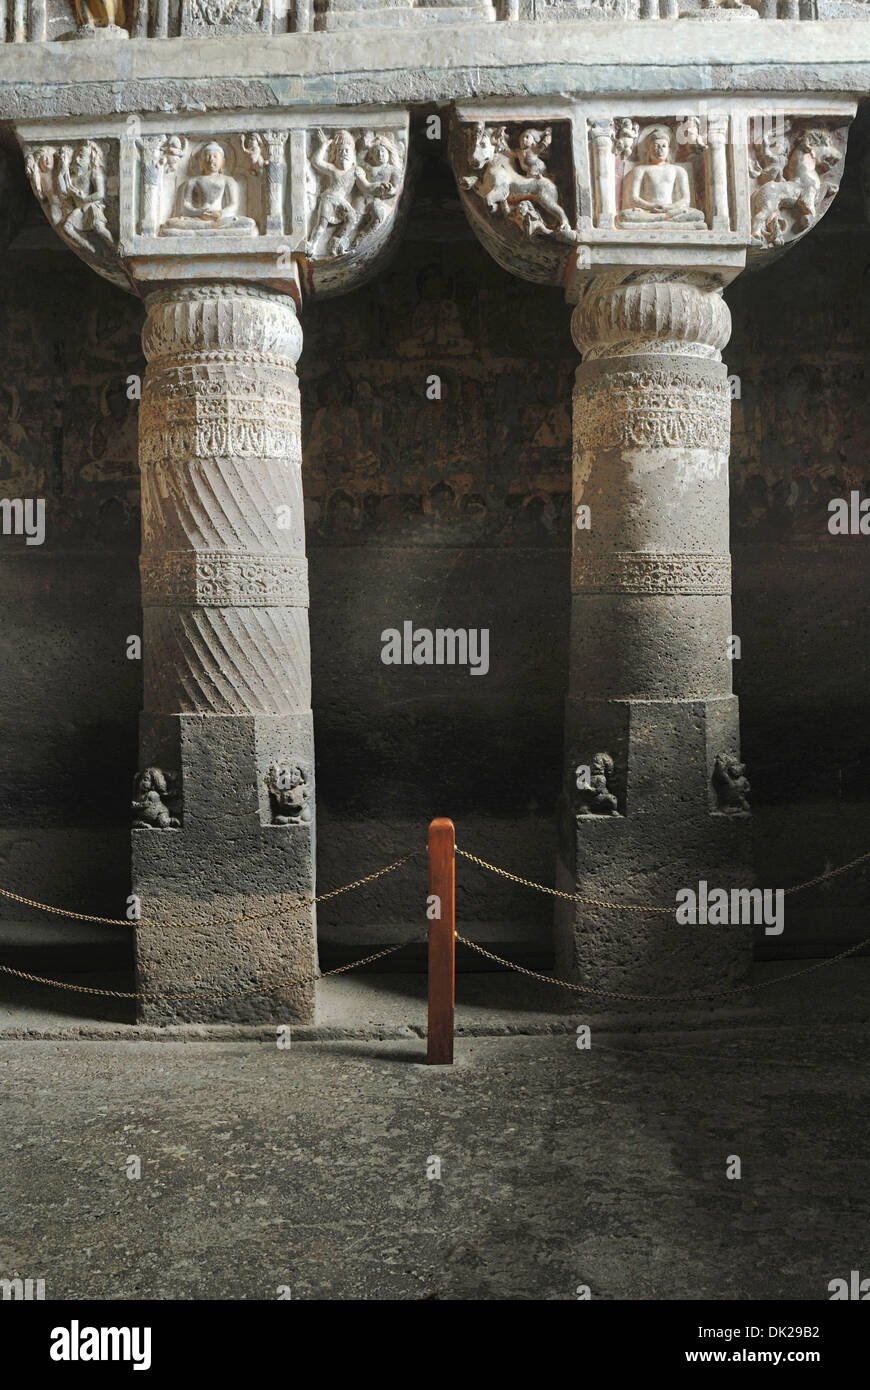 Cave 19: Two Pillars with details. Shows seated Buddha figure in Padmasana. Ajanta Caves, Aurangabad, Maharashtra, India Stock Photo